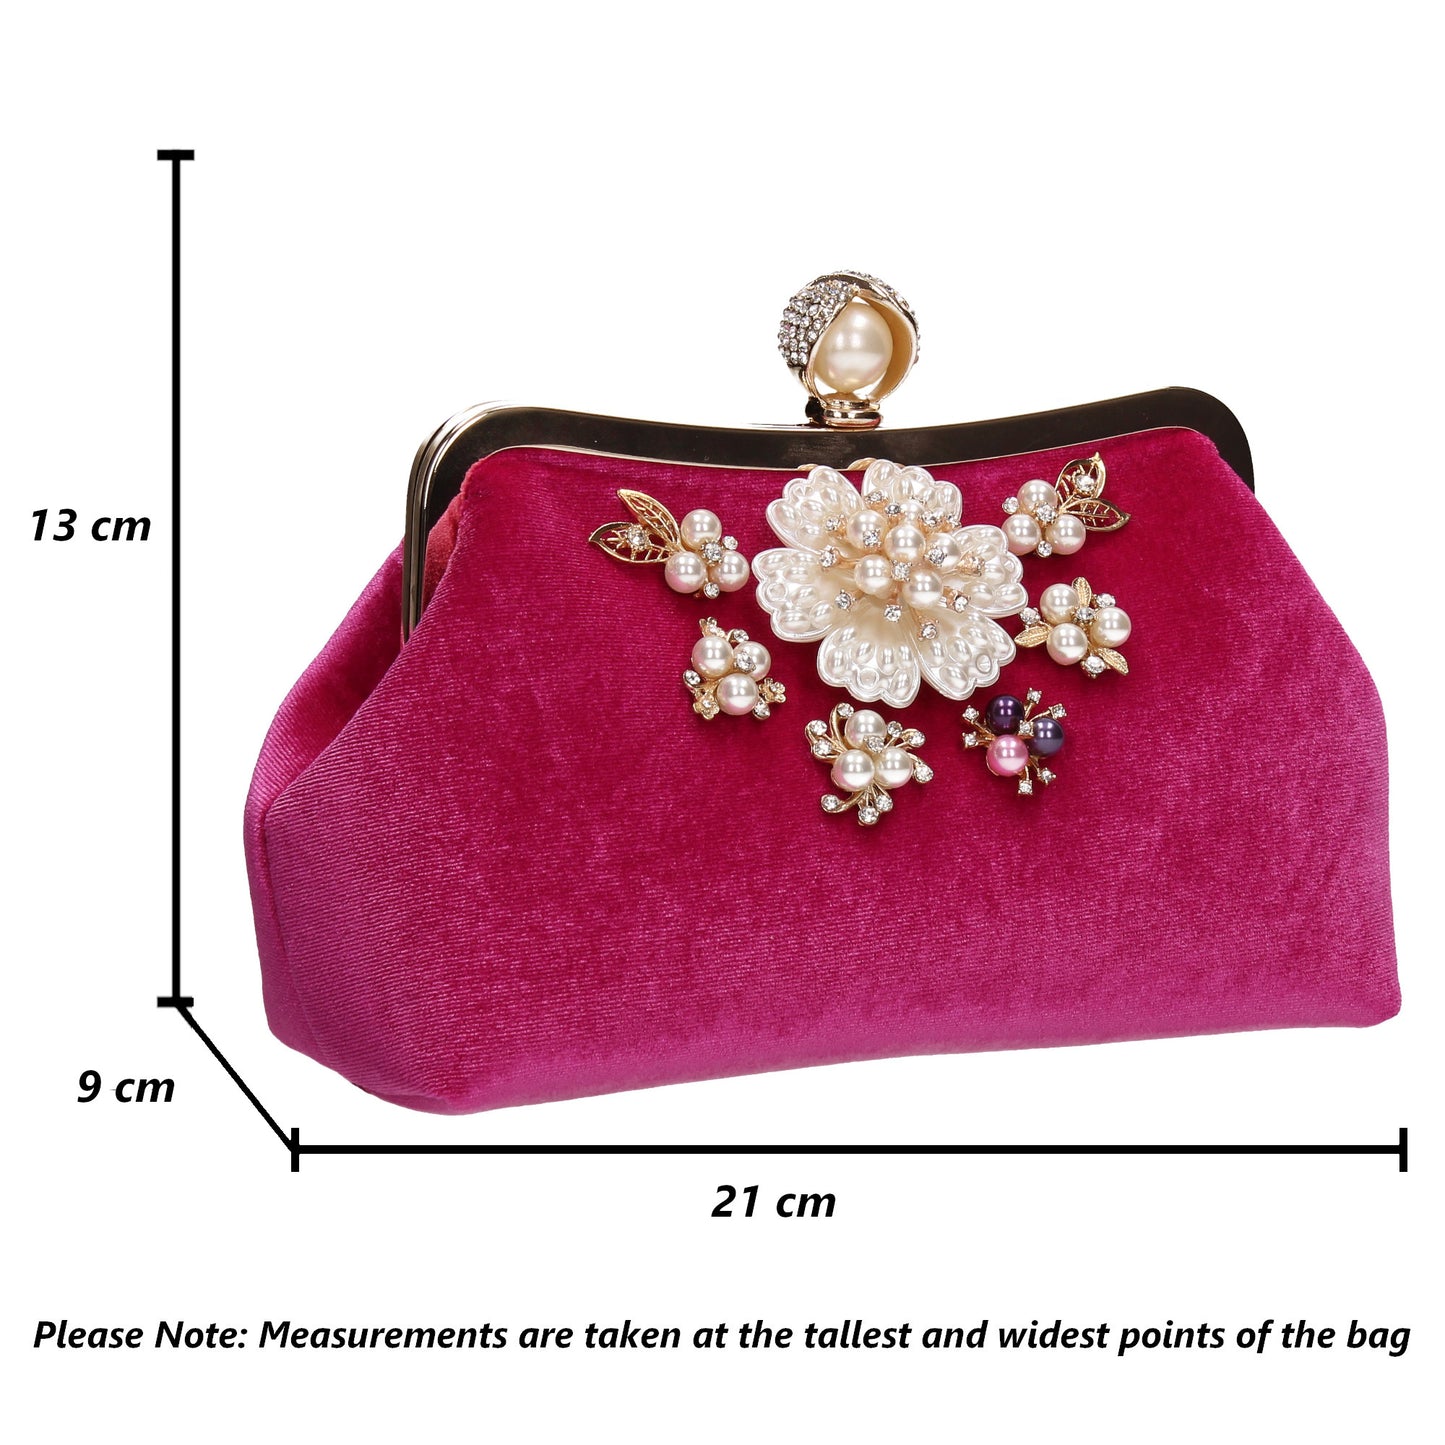 Jayde Faux Pearl Floral Clutch Bag Fuchsia Pink